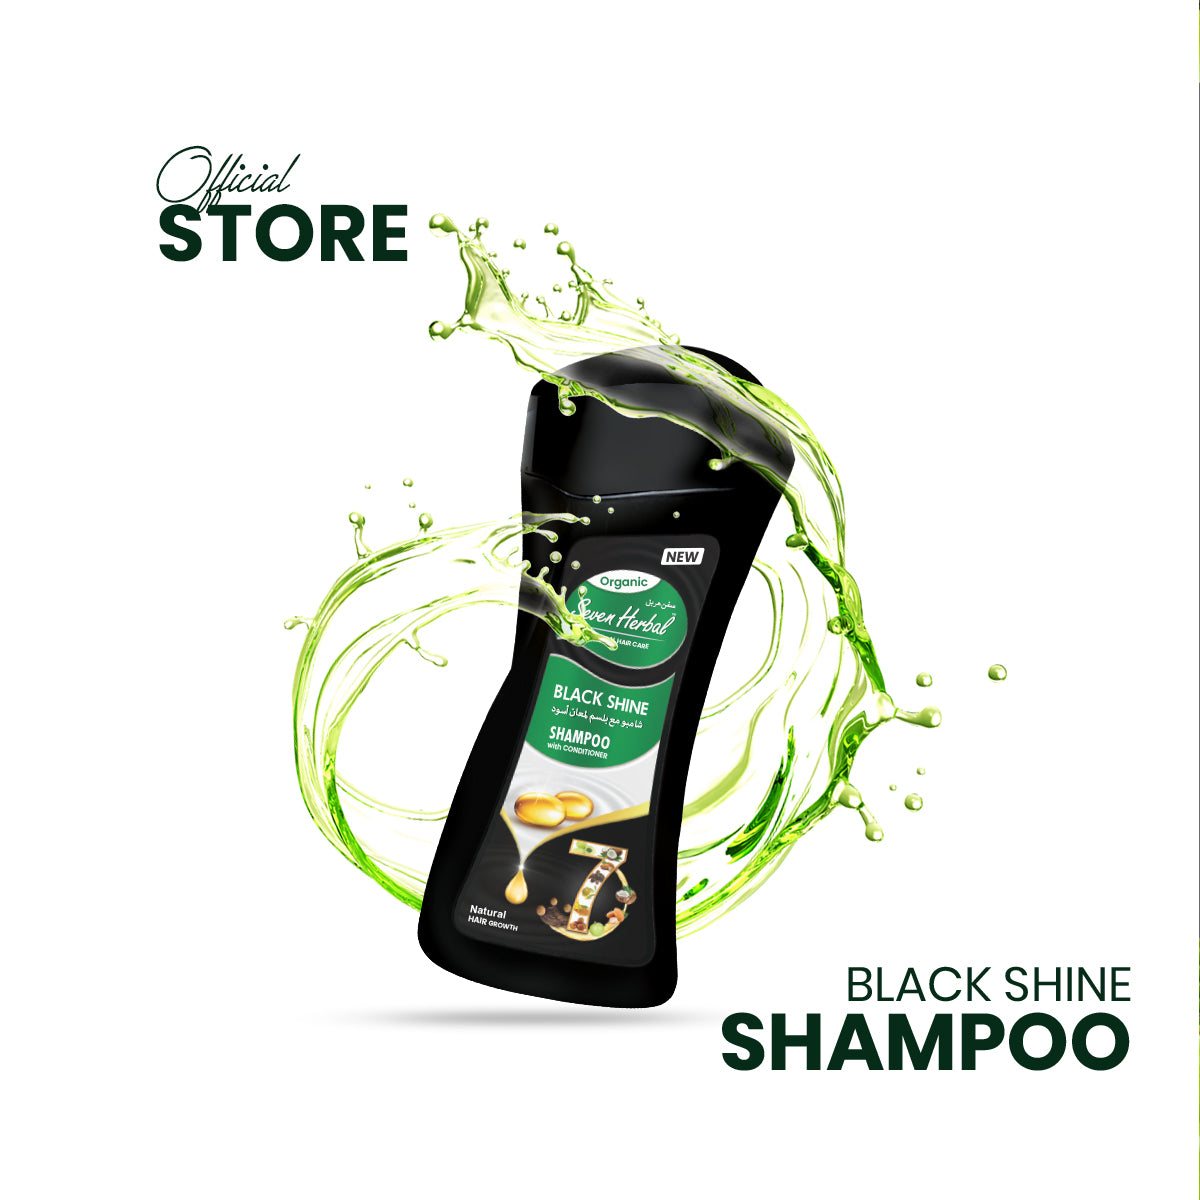 Seven Herbal Black Shine Shampoo with Conditioner